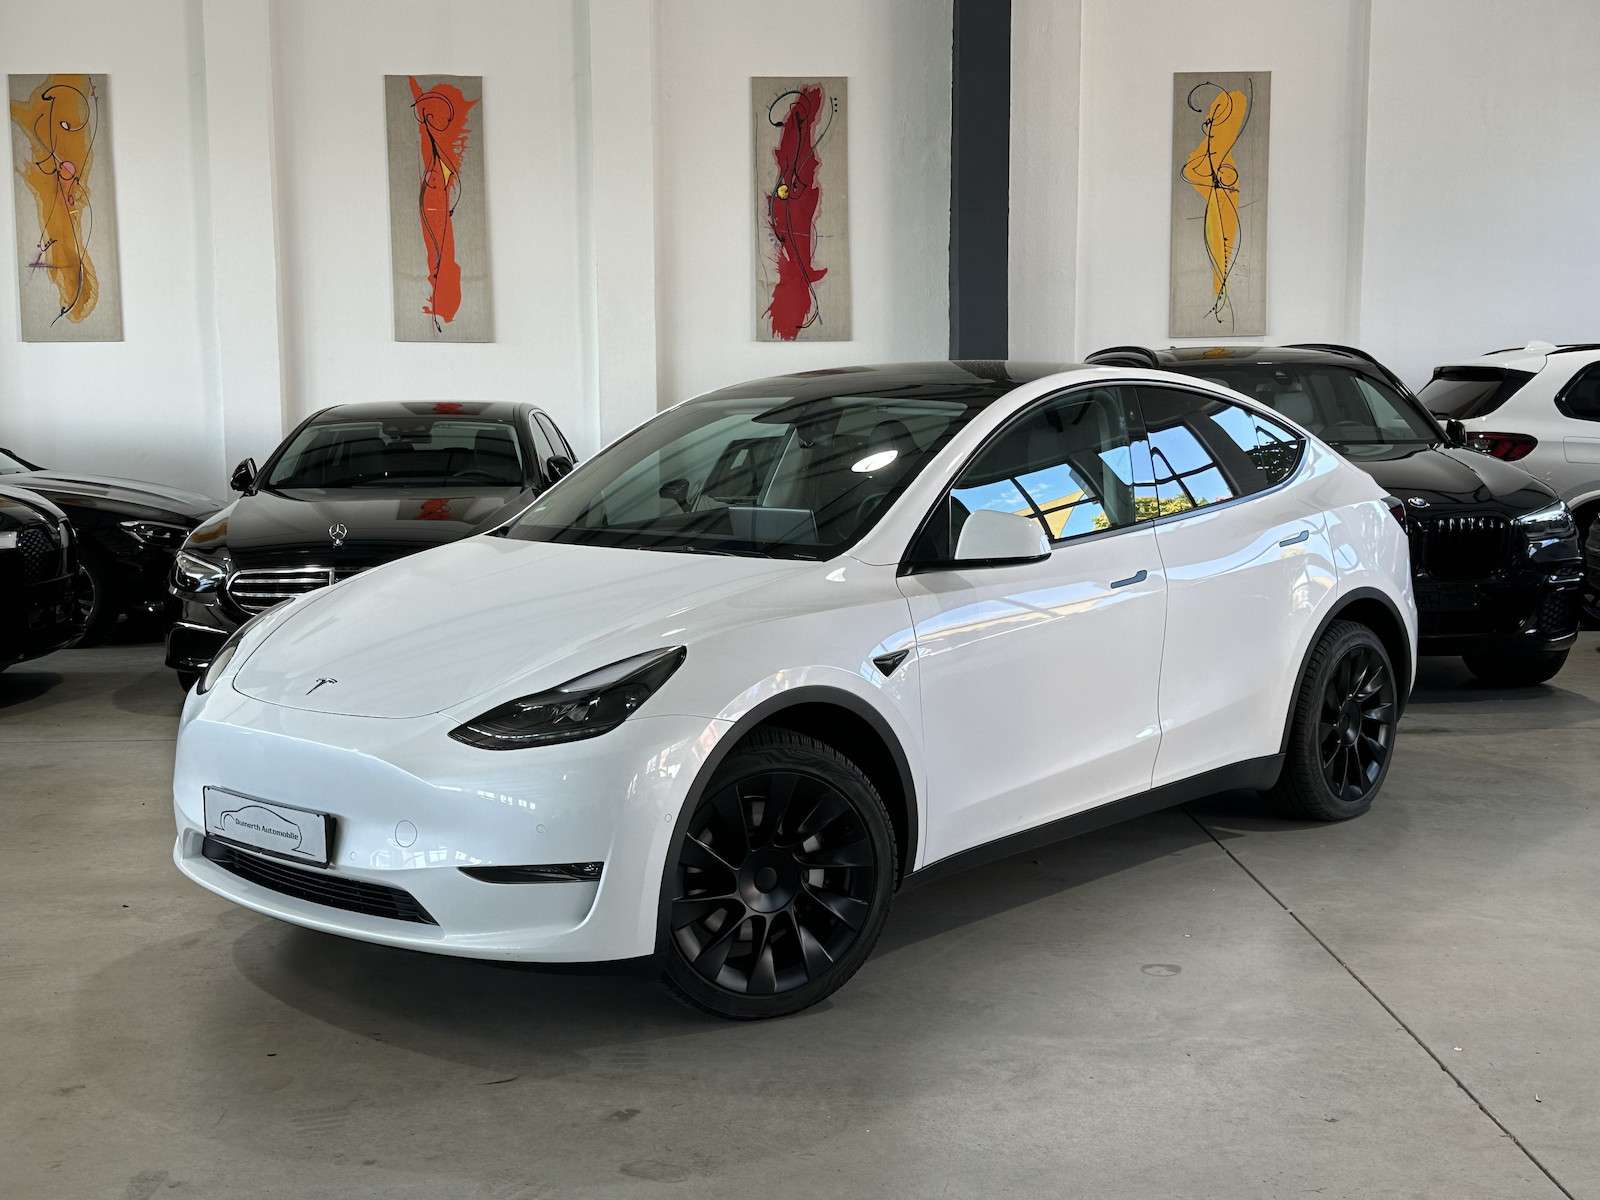 Tesla Model Y Sedan in White used in Frankfurt am Main for € 49,880.-